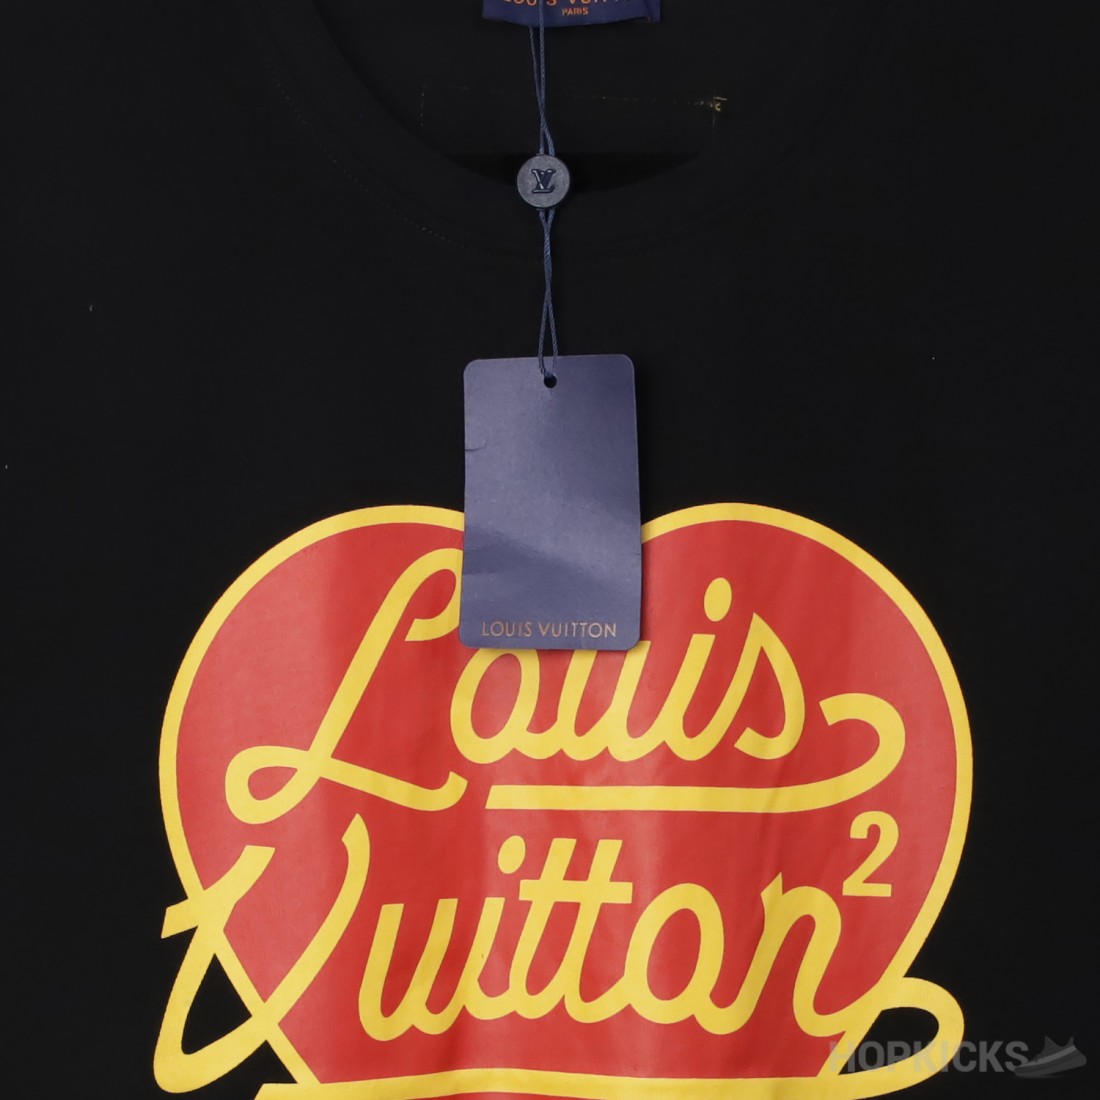 Louis Vuitton x Nigo Intarsia Jacquard Heart Crewneck Dark Ocean Men's -  FW21 - US